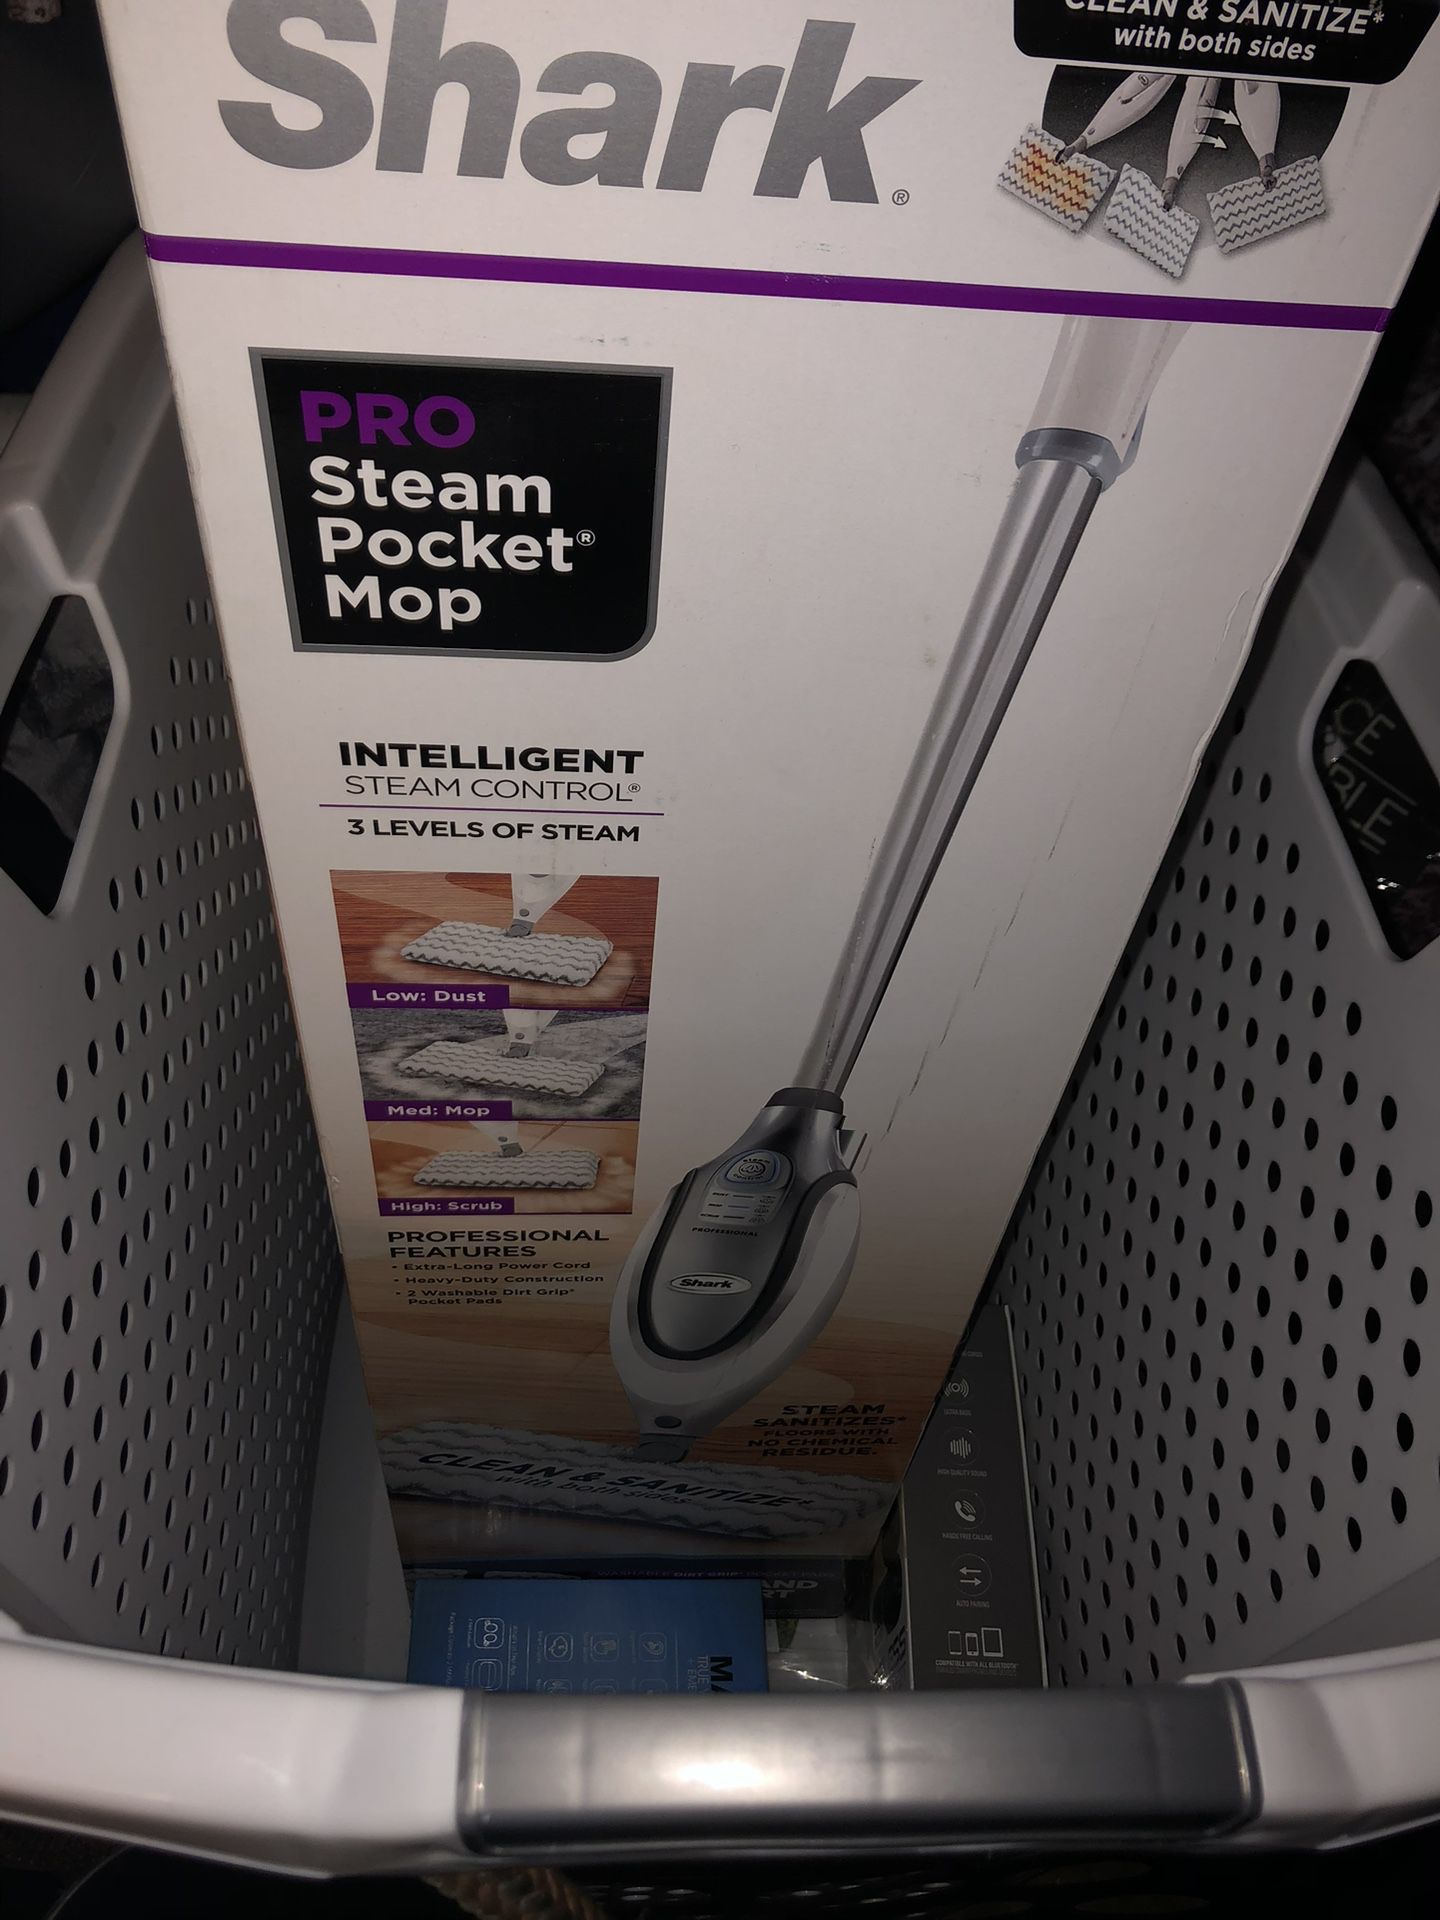 SHARK Pro Steam Pocket mop